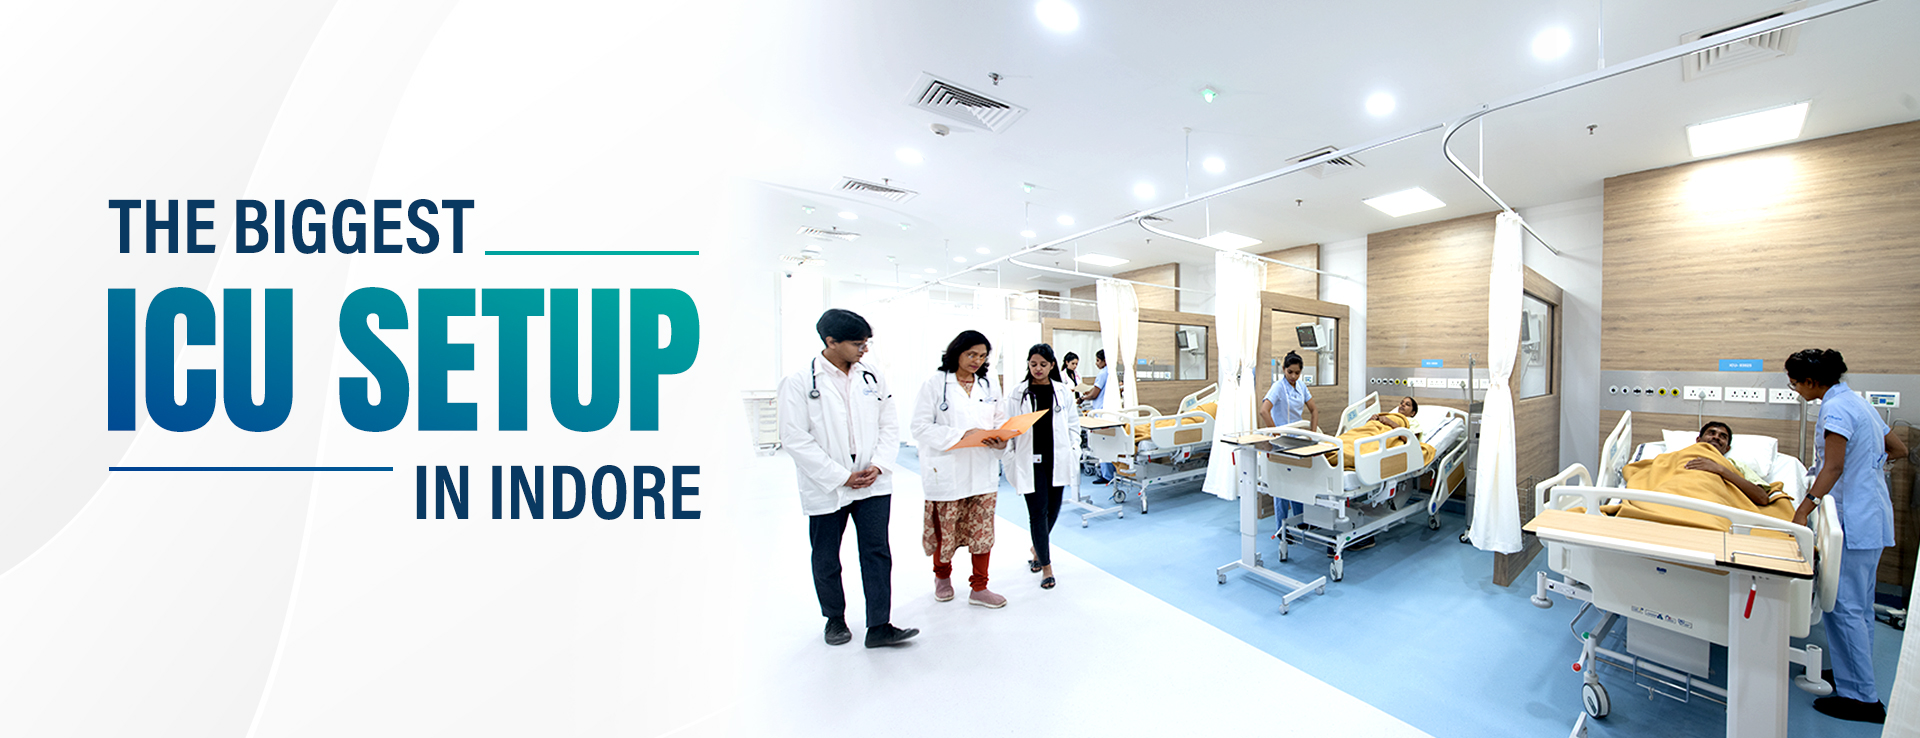 The Biggest ICU Setup in Indore